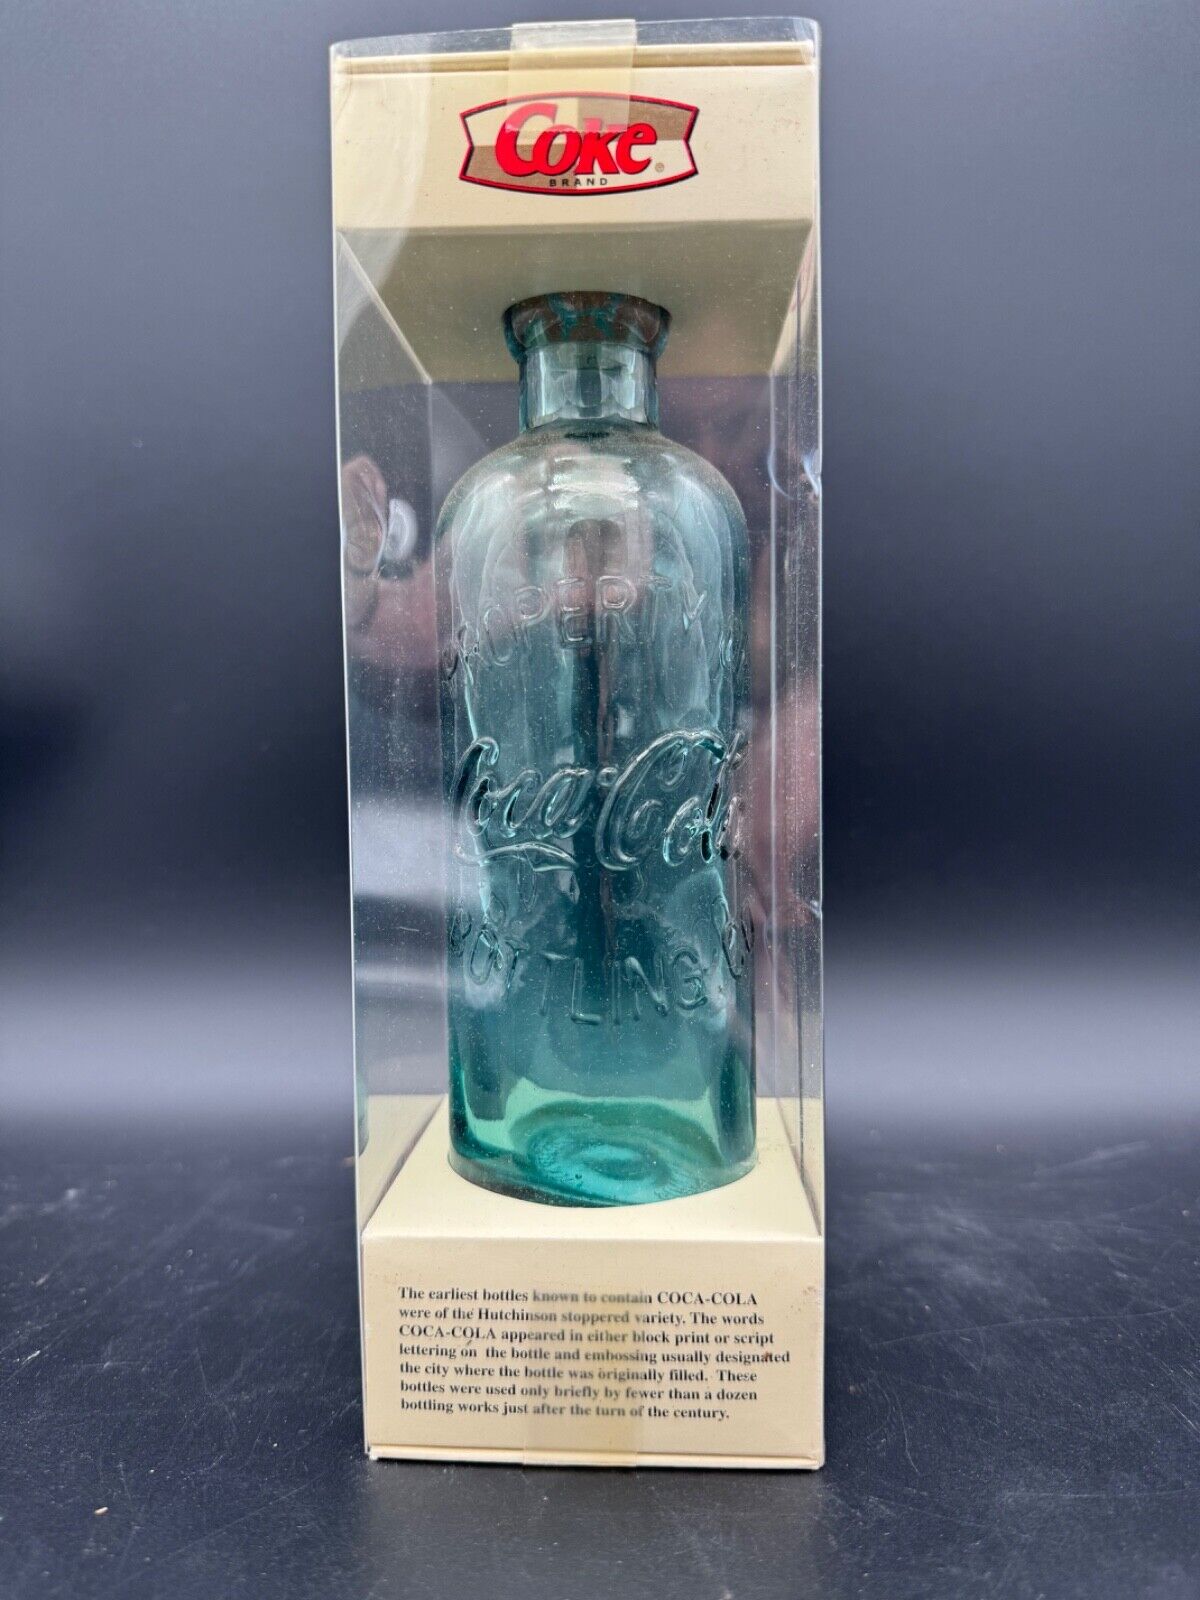 Coca Cola Coke Bottle Reproduced Replica Commemorative Bottle 1899 - Collectible